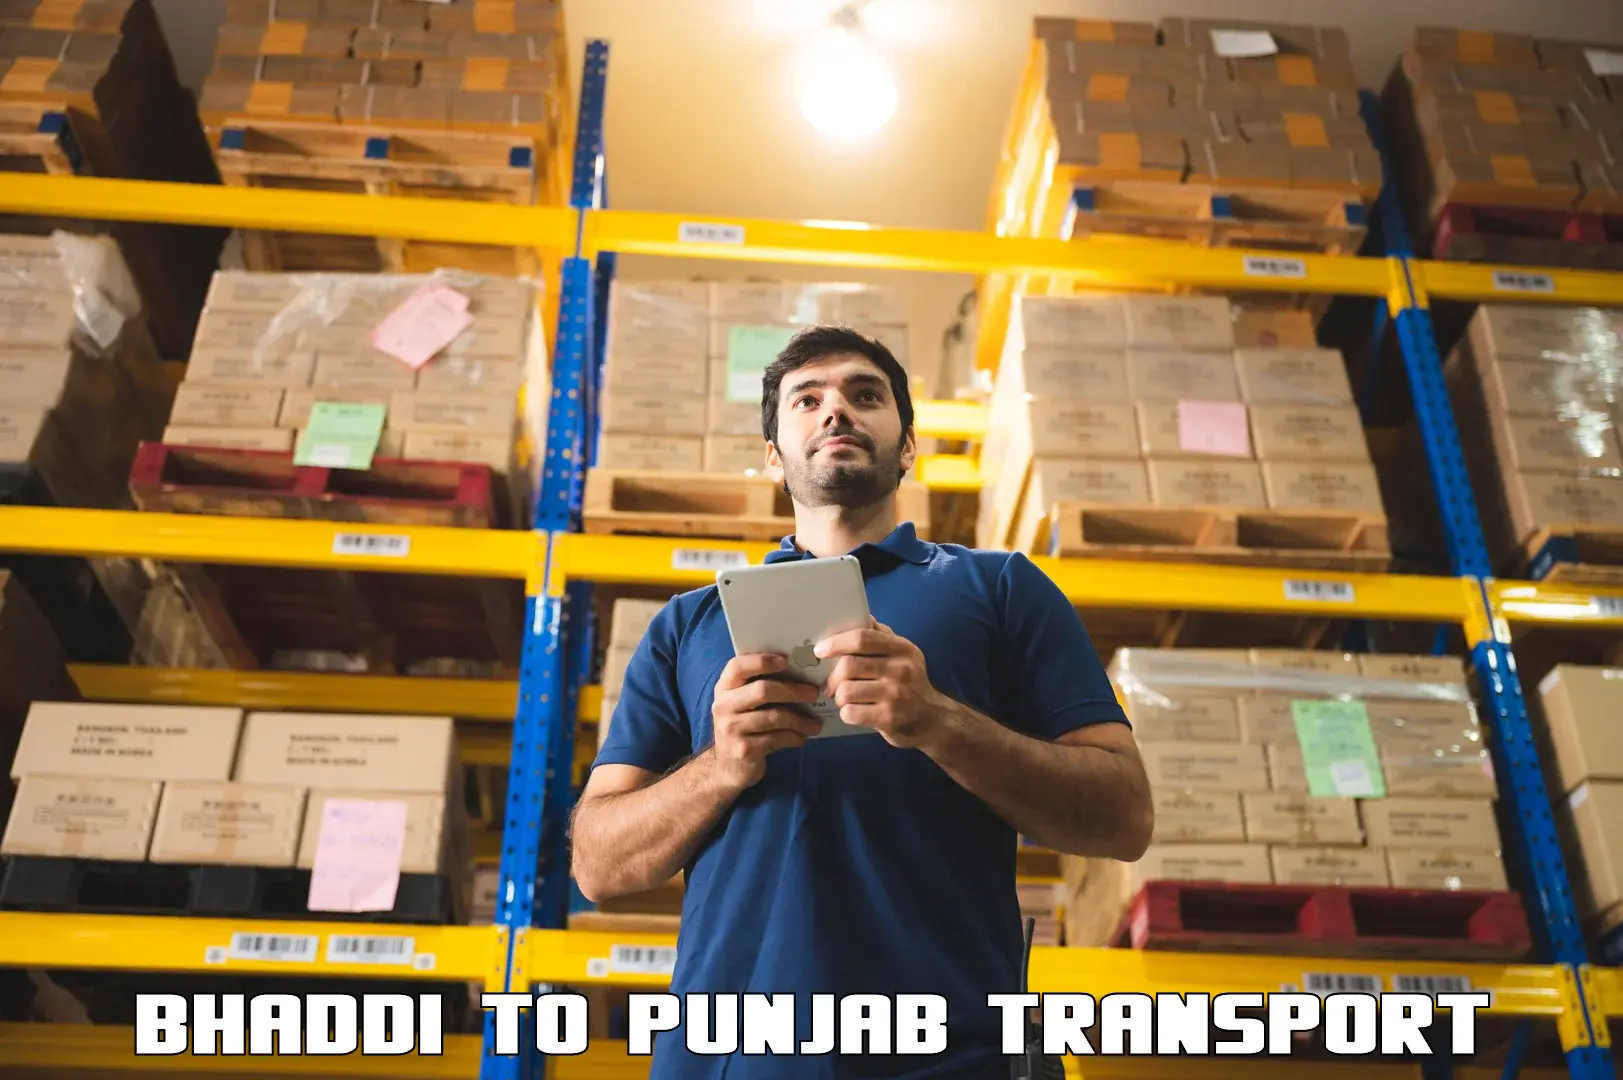 Part load transport service in India Bhaddi to Malerkotla